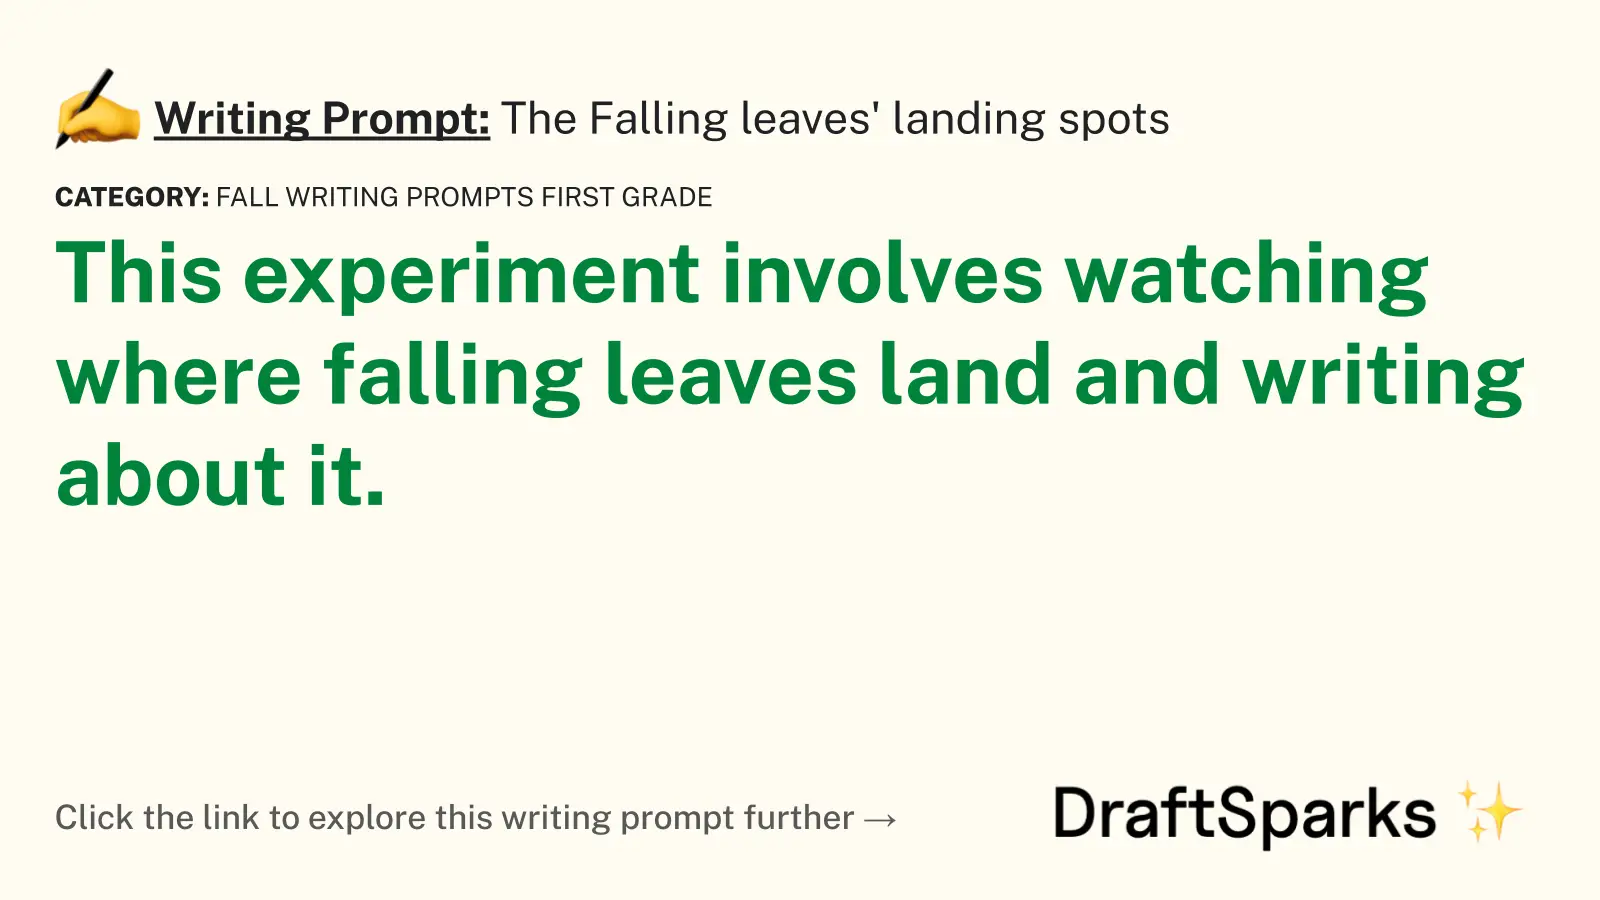 The Falling leaves’ landing spots